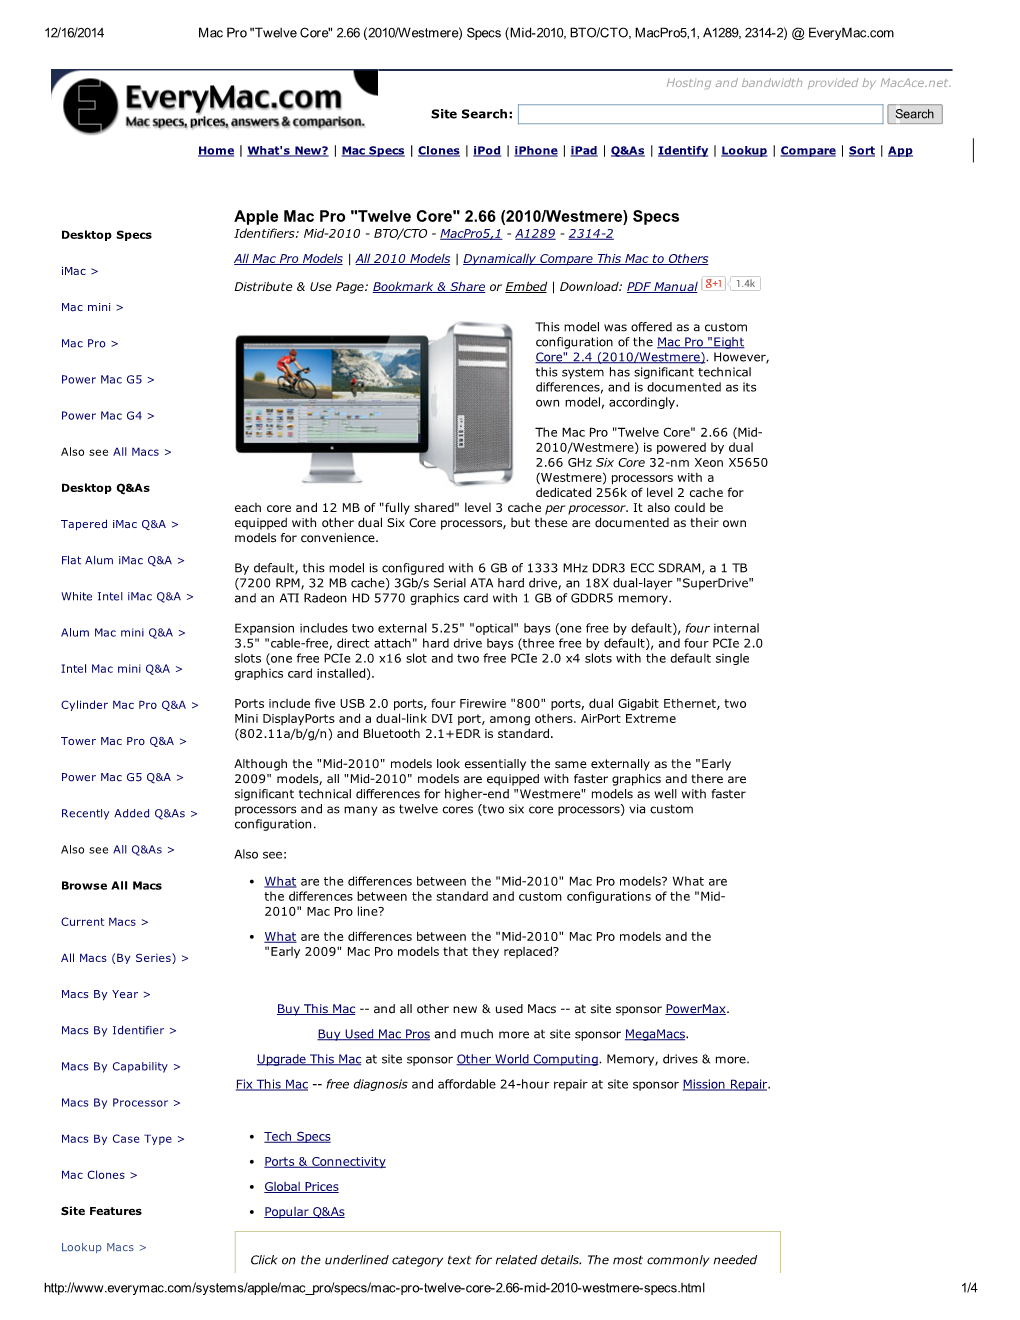 Apple Mac Pro "Twelve Core" 2.66 (2010/Westmere) Specs Desktop Specs Identifiers: Mid­2010 ­ BTO/CTO ­ Macpro5,1 ­ A1289 ­ 2314­2